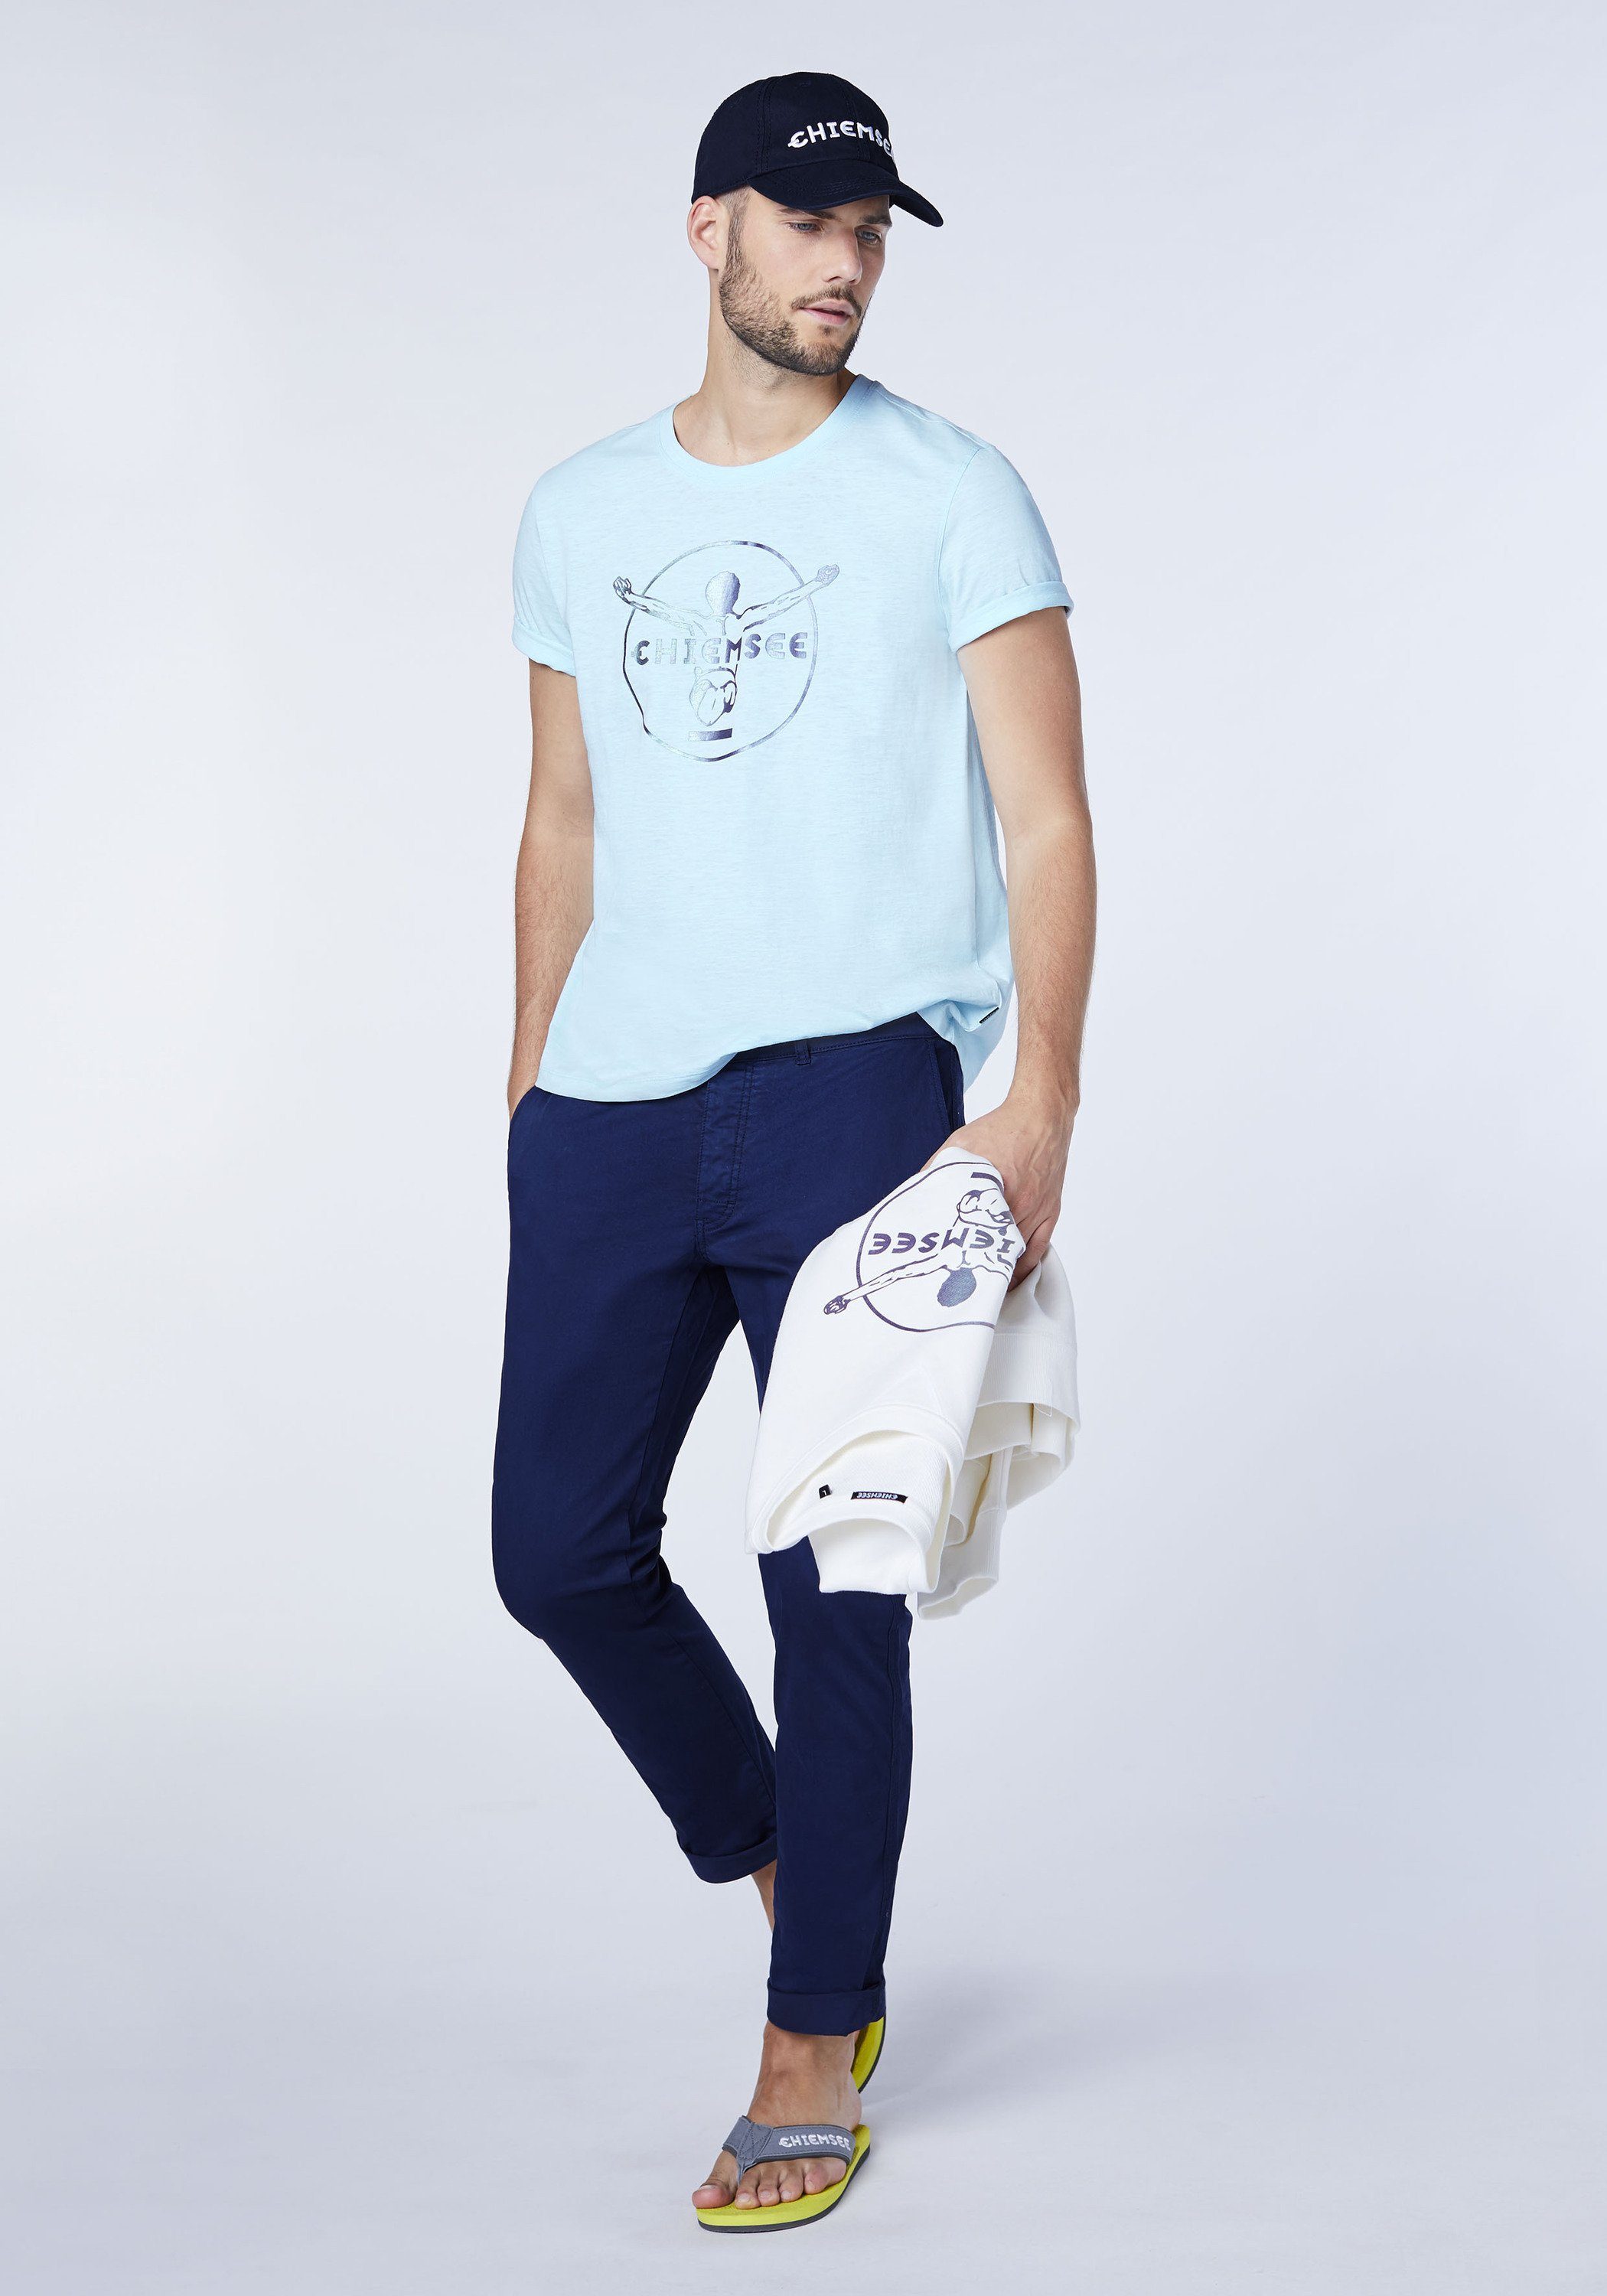 T-Shirt gedrucktem Coryda 1 mit Blue Print-Shirt Chiemsee Label-Symbol